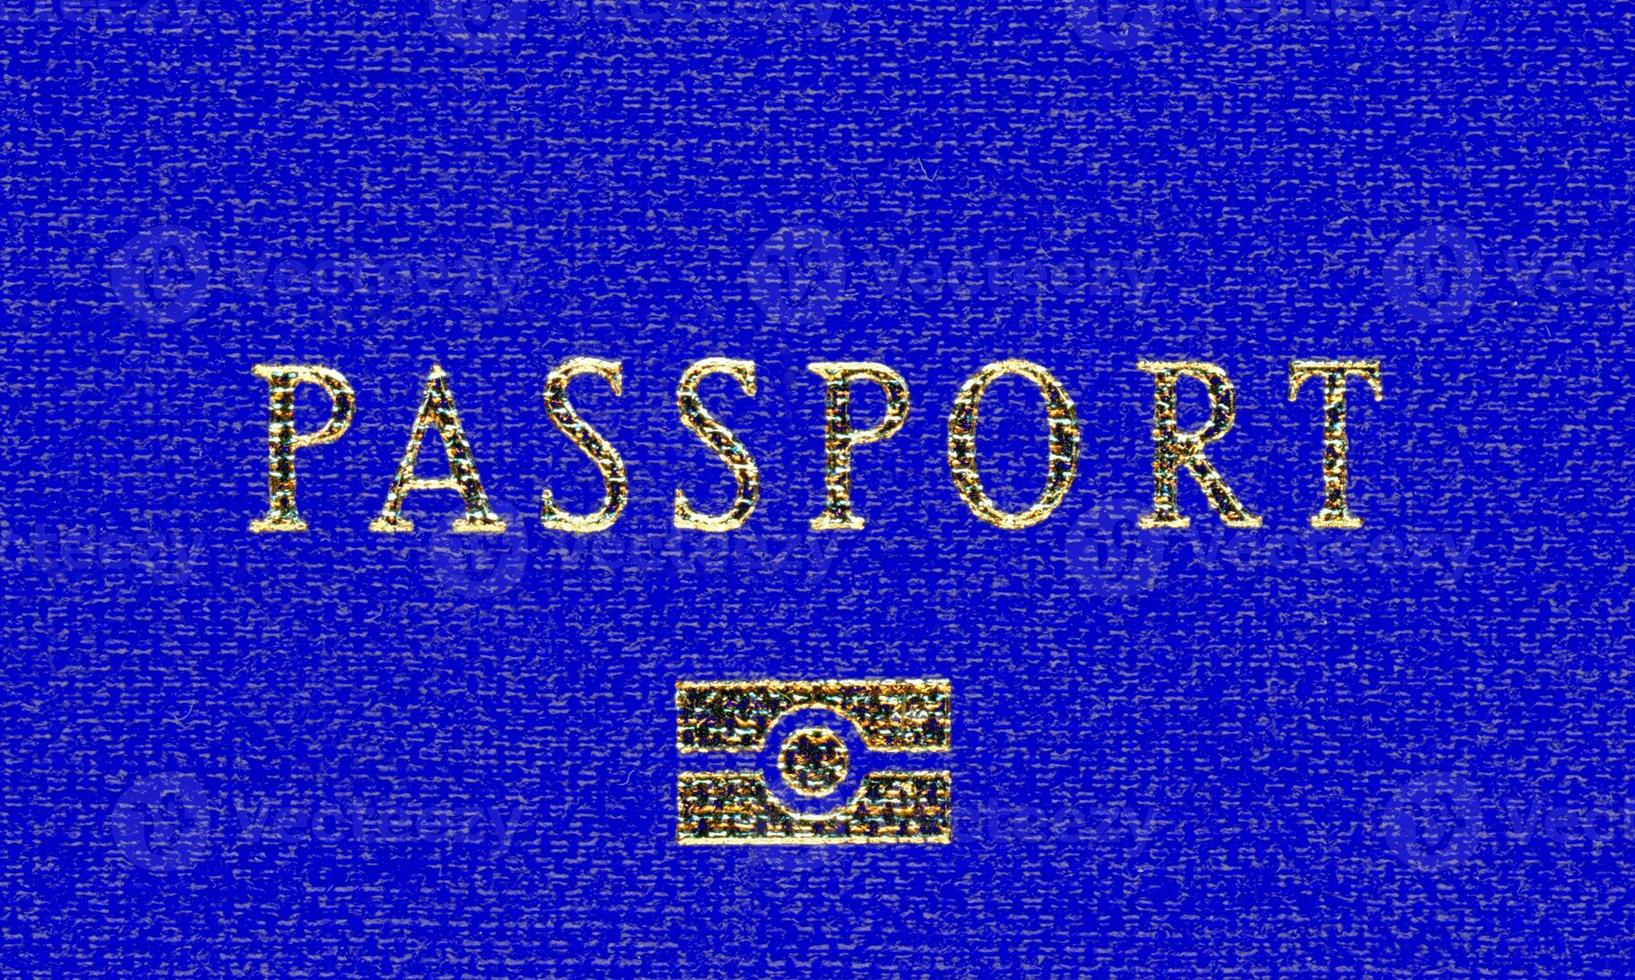 pasaporte electrónico epassport foto